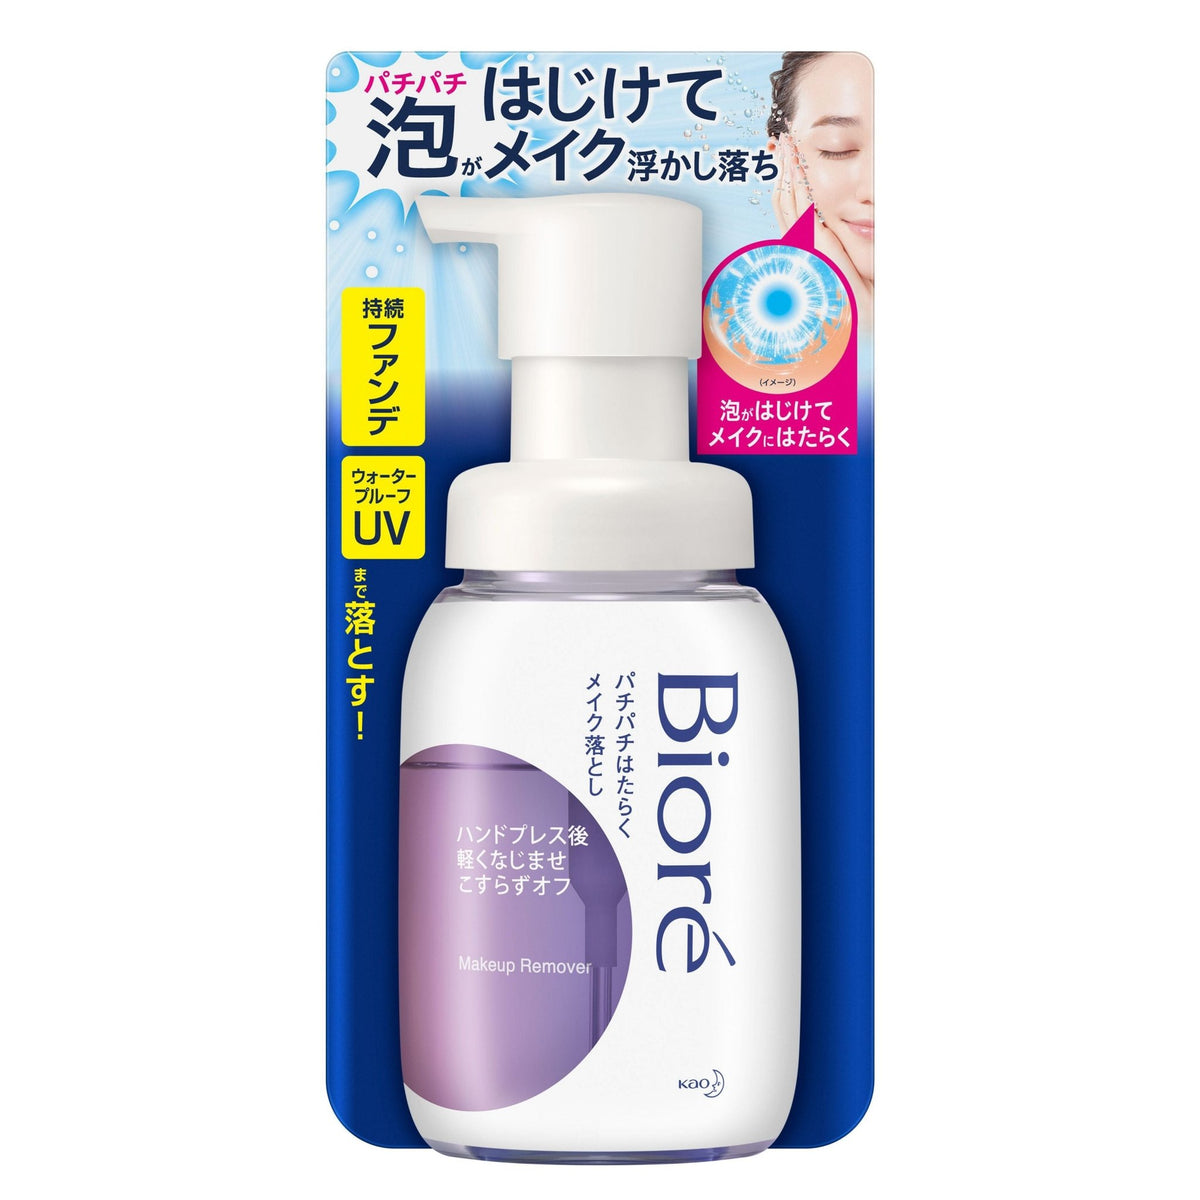 Biore Crackle Makeup Remover - Biore | Kiokii and...